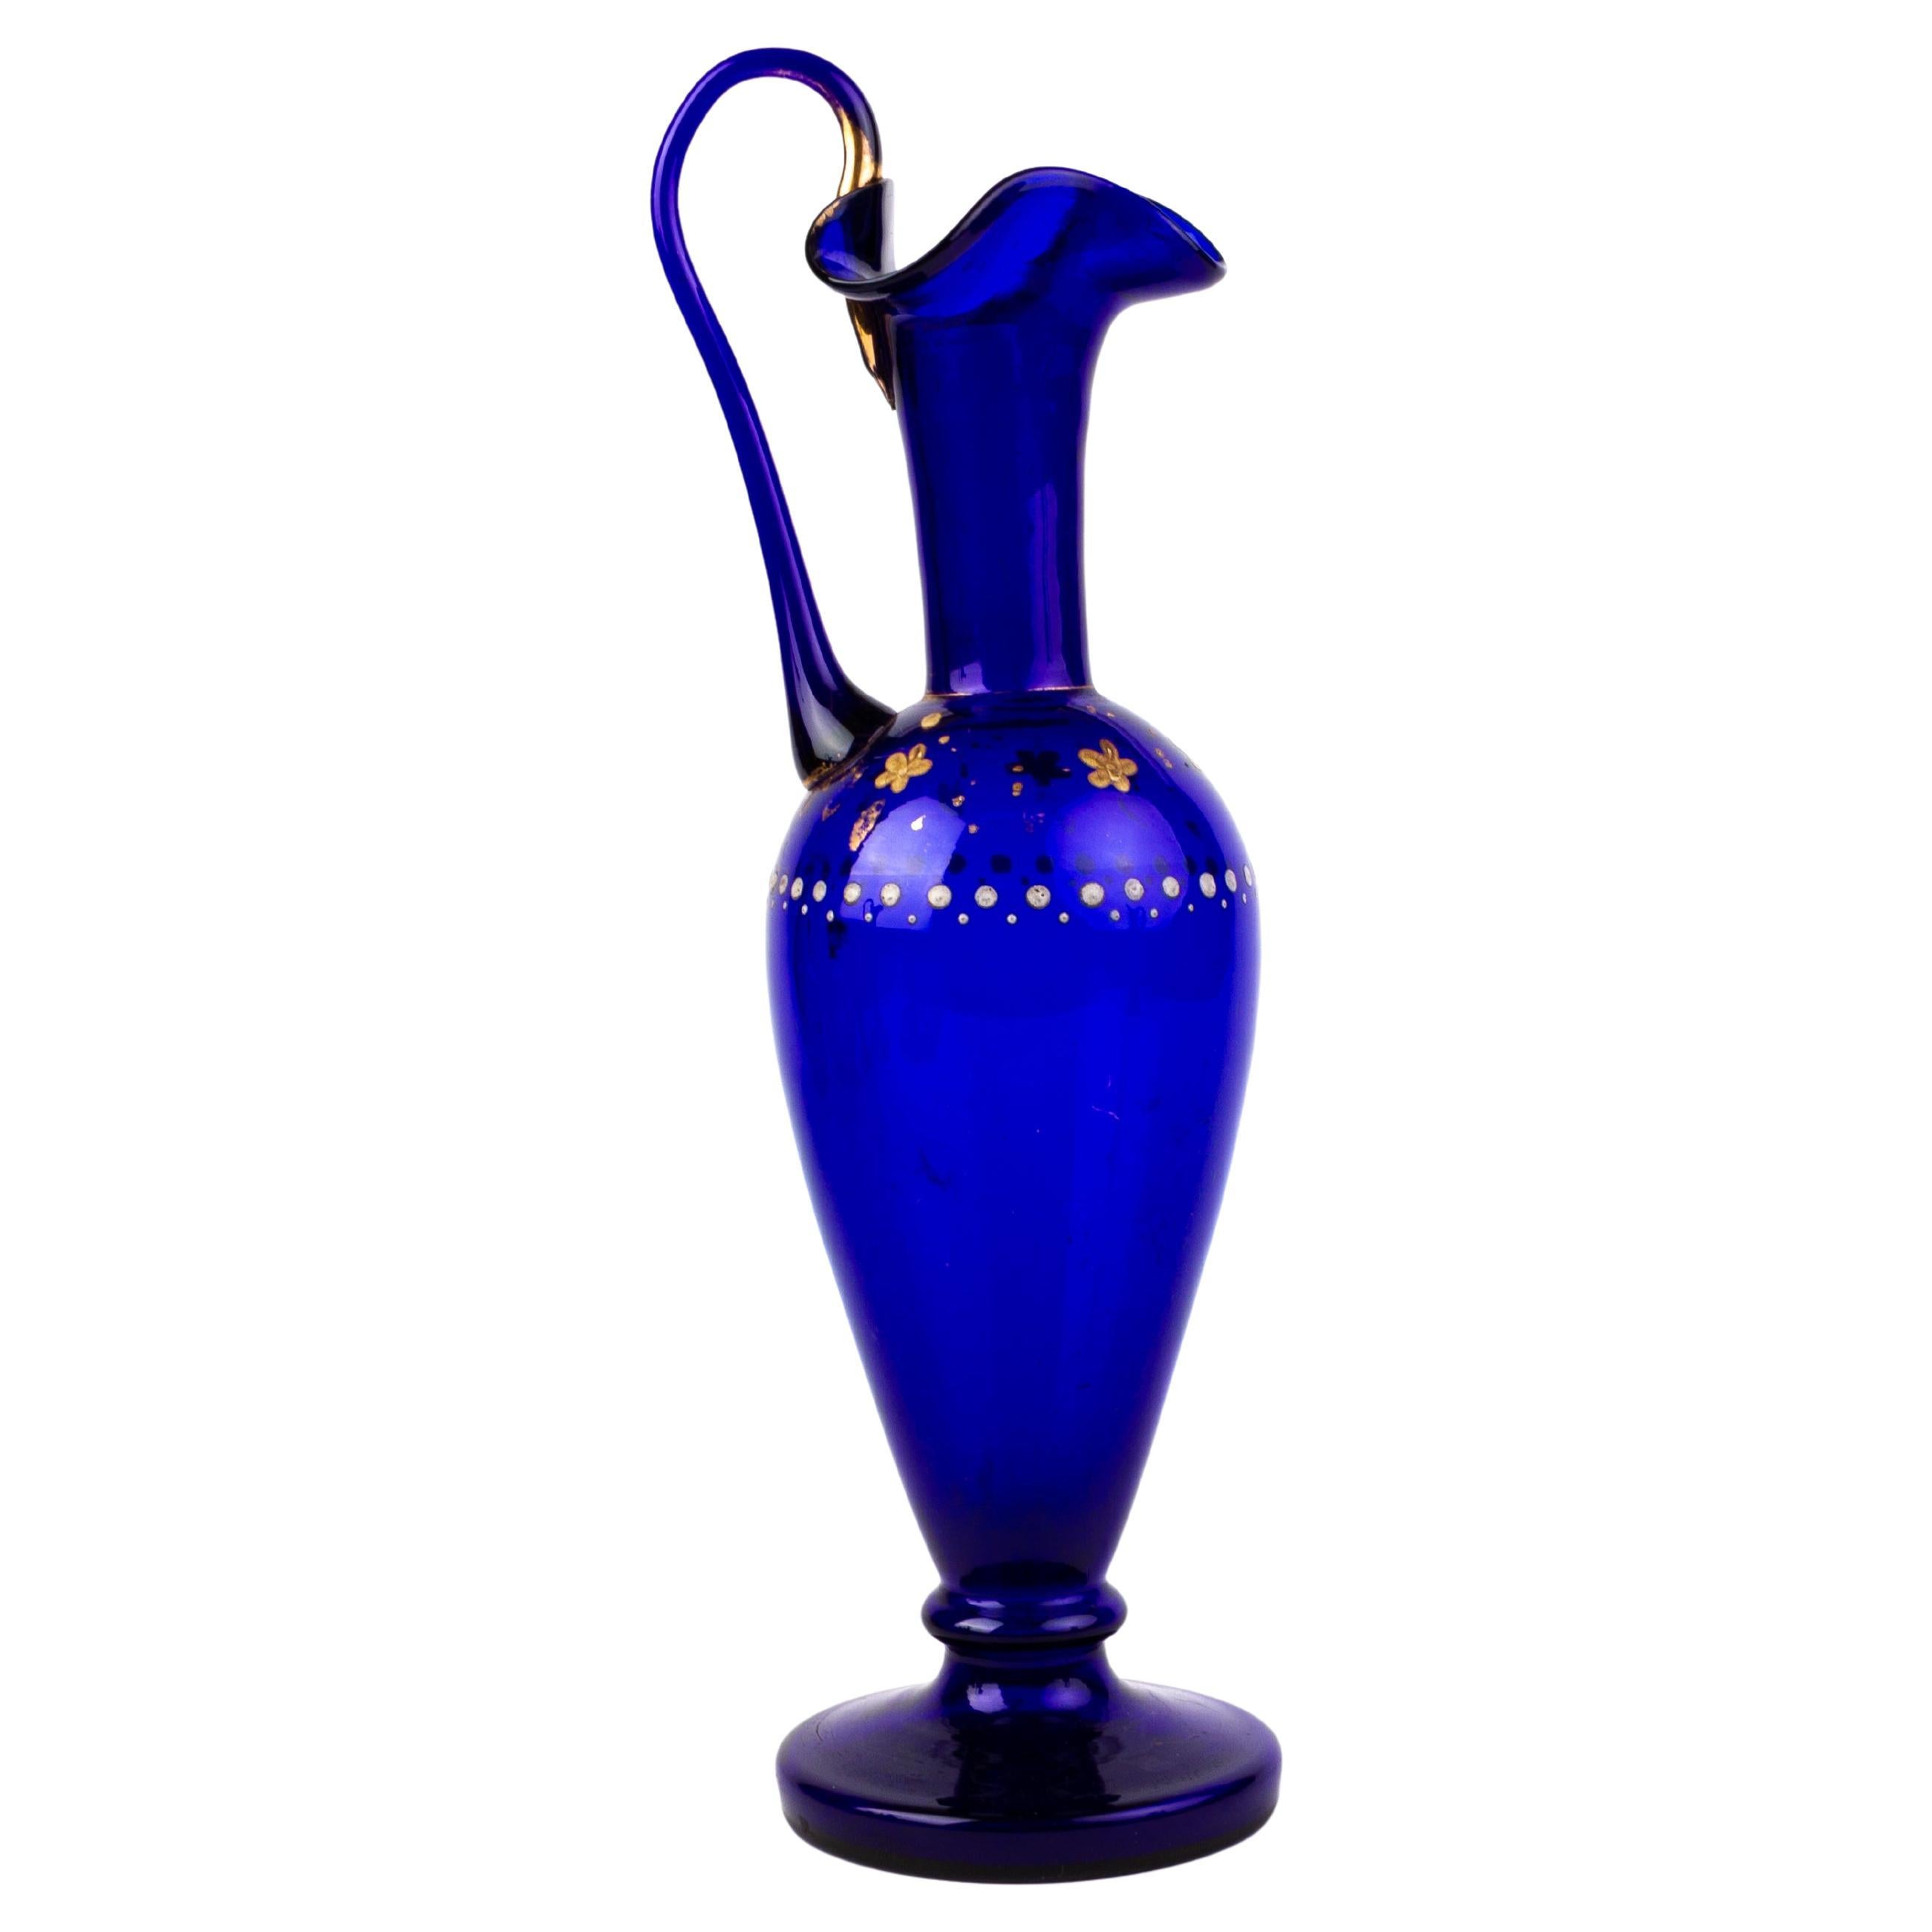 Bristol Blue Victorian Enameled Glass Ewer 19th Century